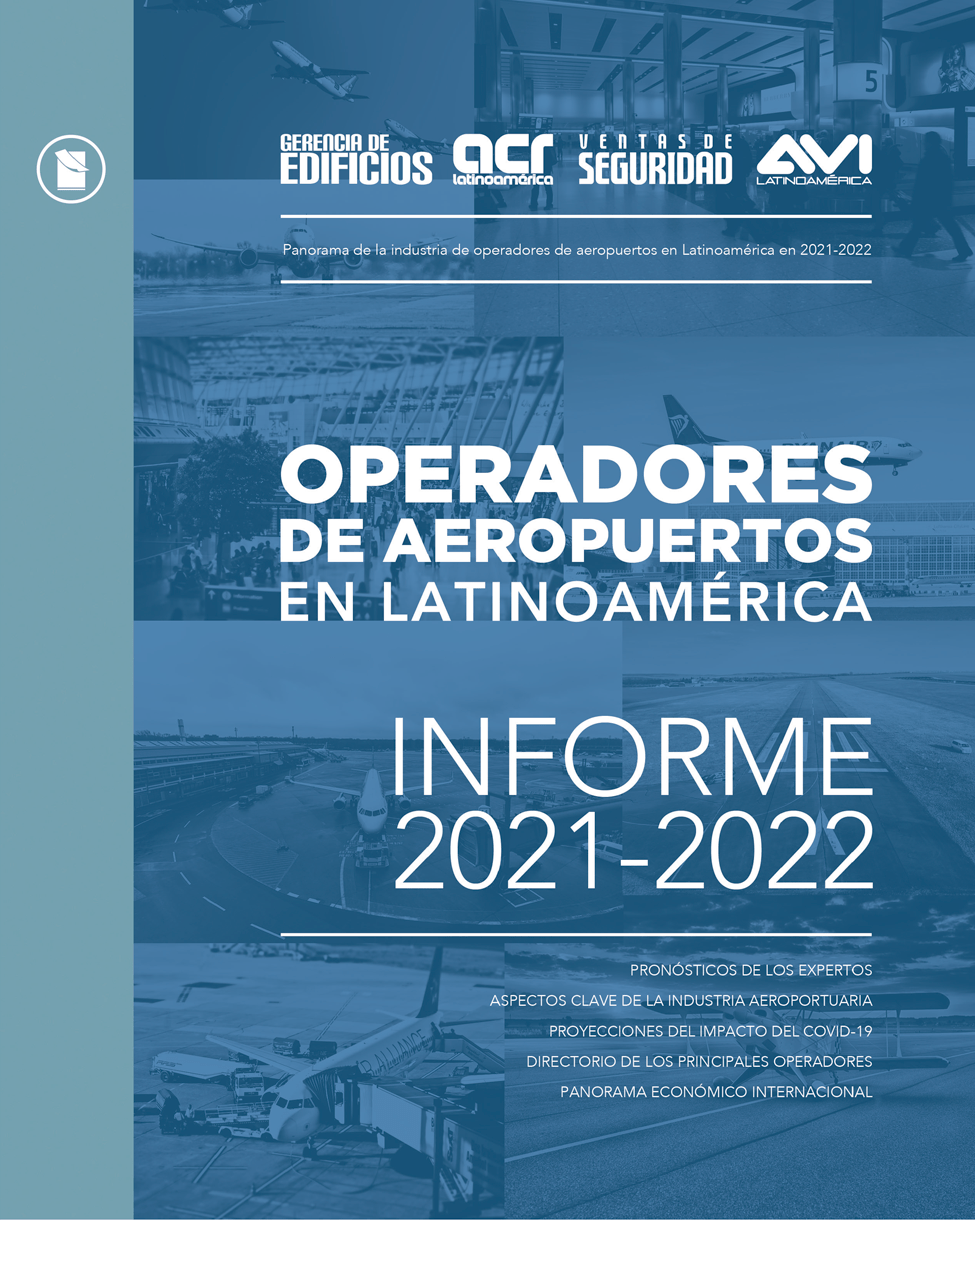 OPERADORES DE AEROPUERTOS EN LATINOAMÉRICA INFORME 2021-2022 Image